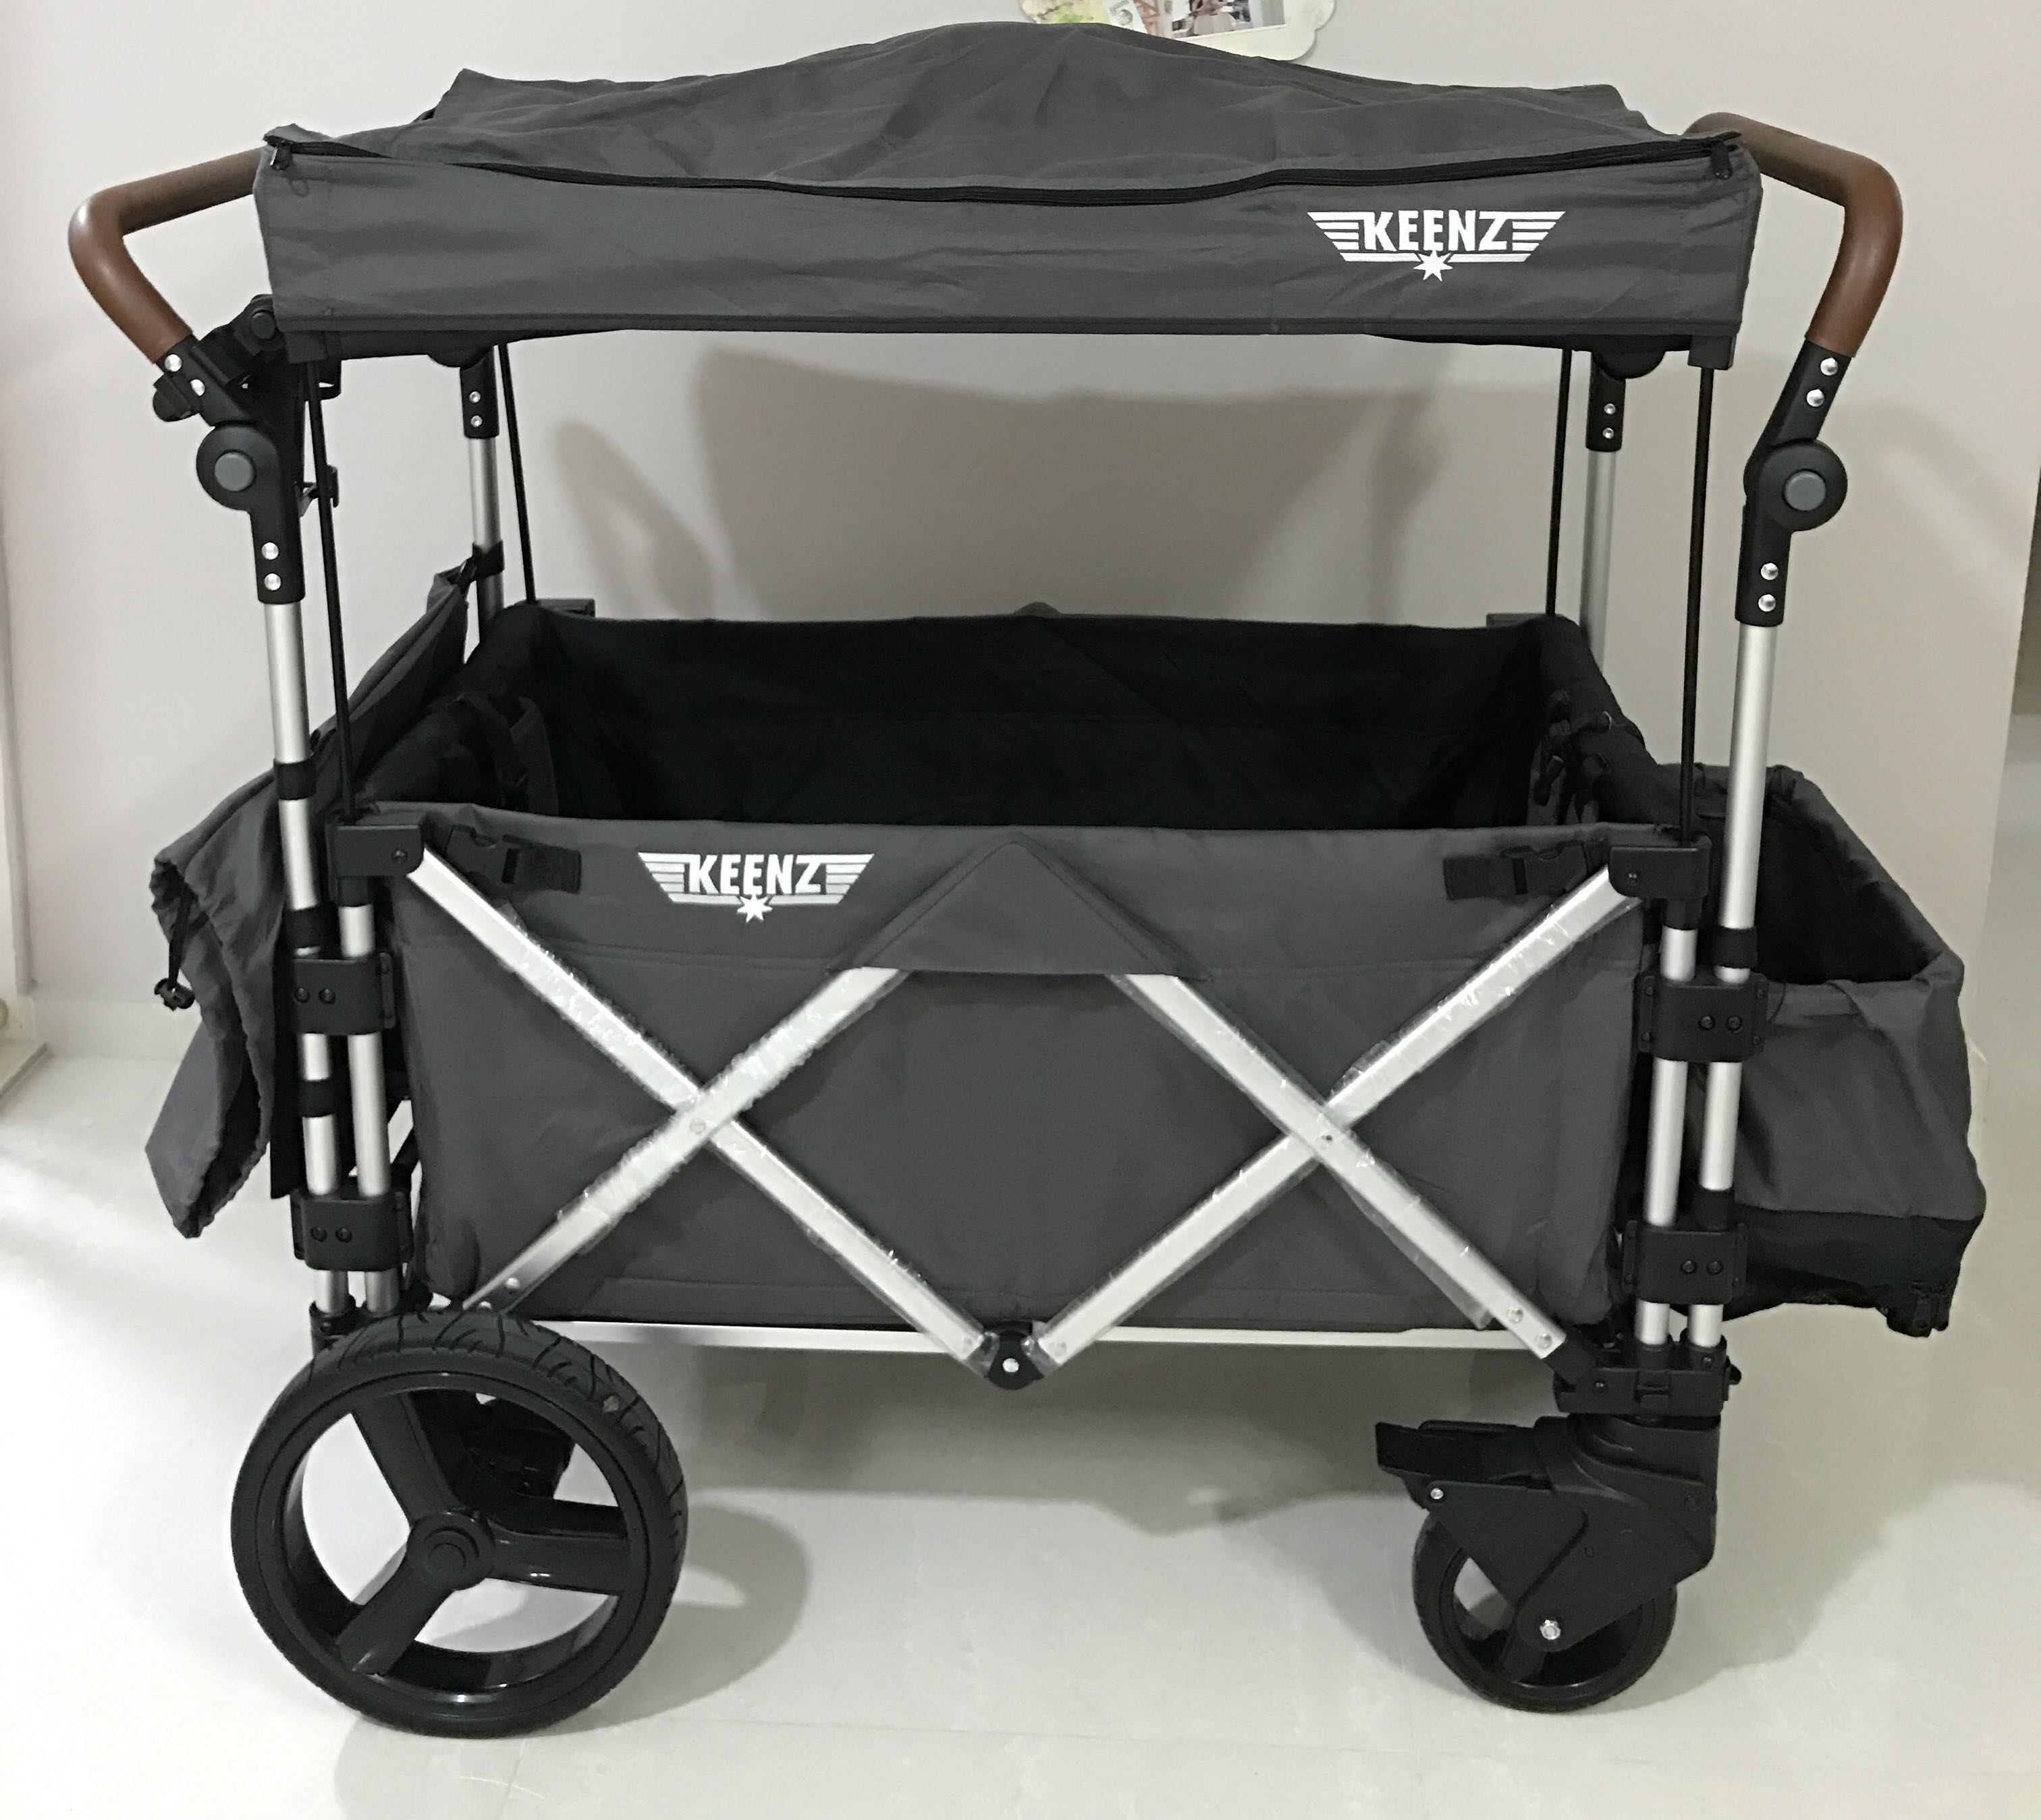 keenz wagon on sale